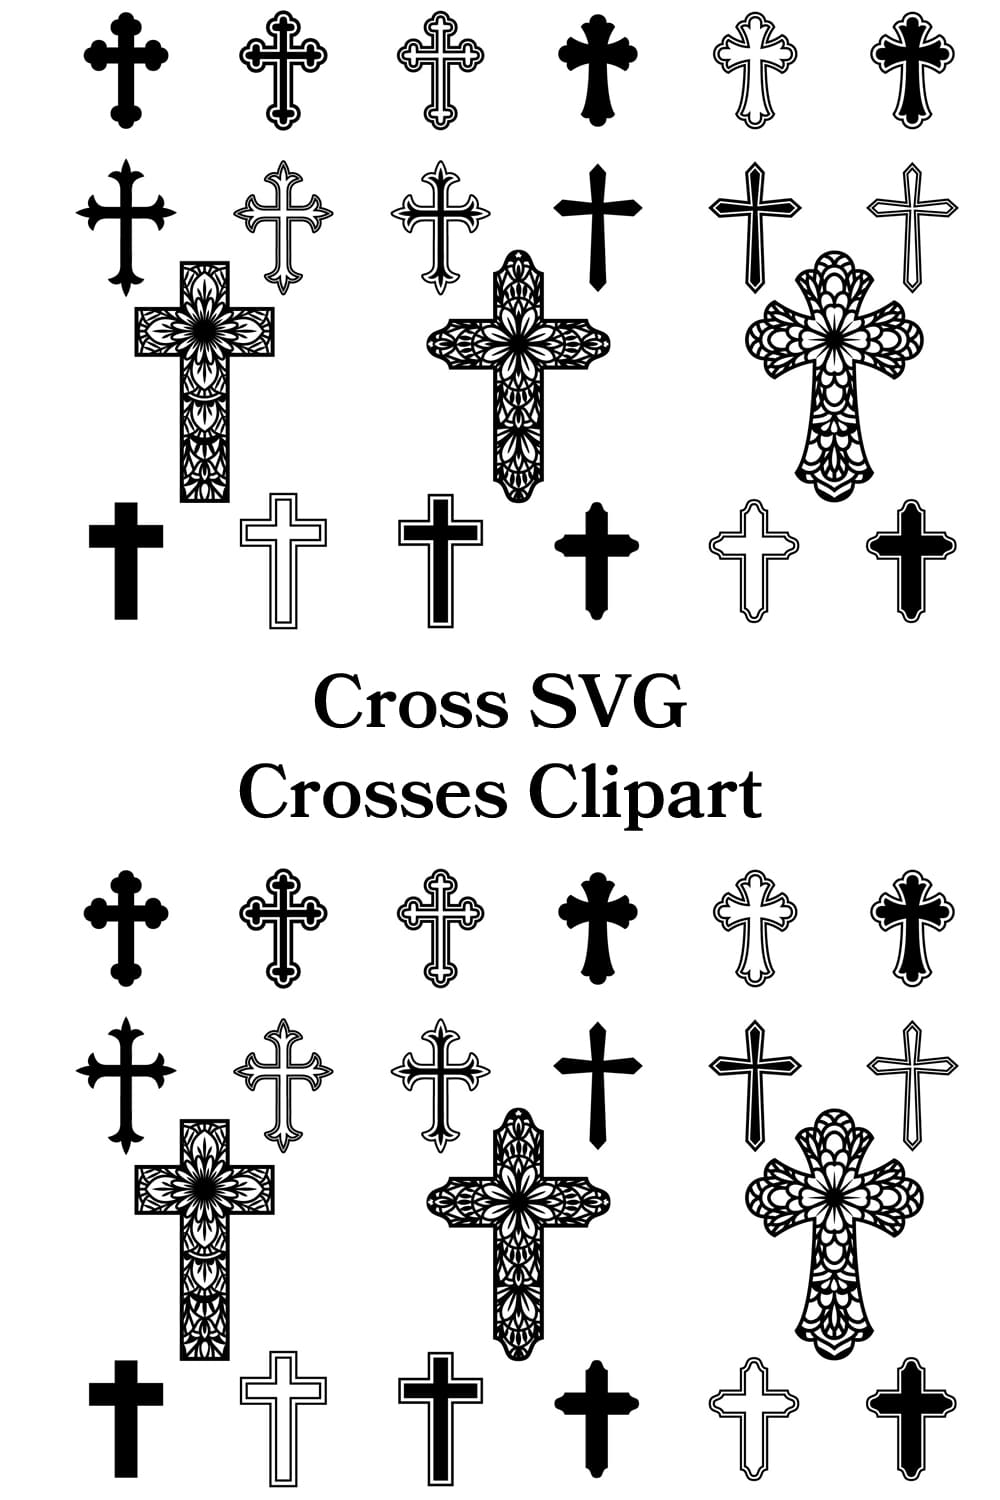 Cross svg crosses clipart - pinterest image preview.